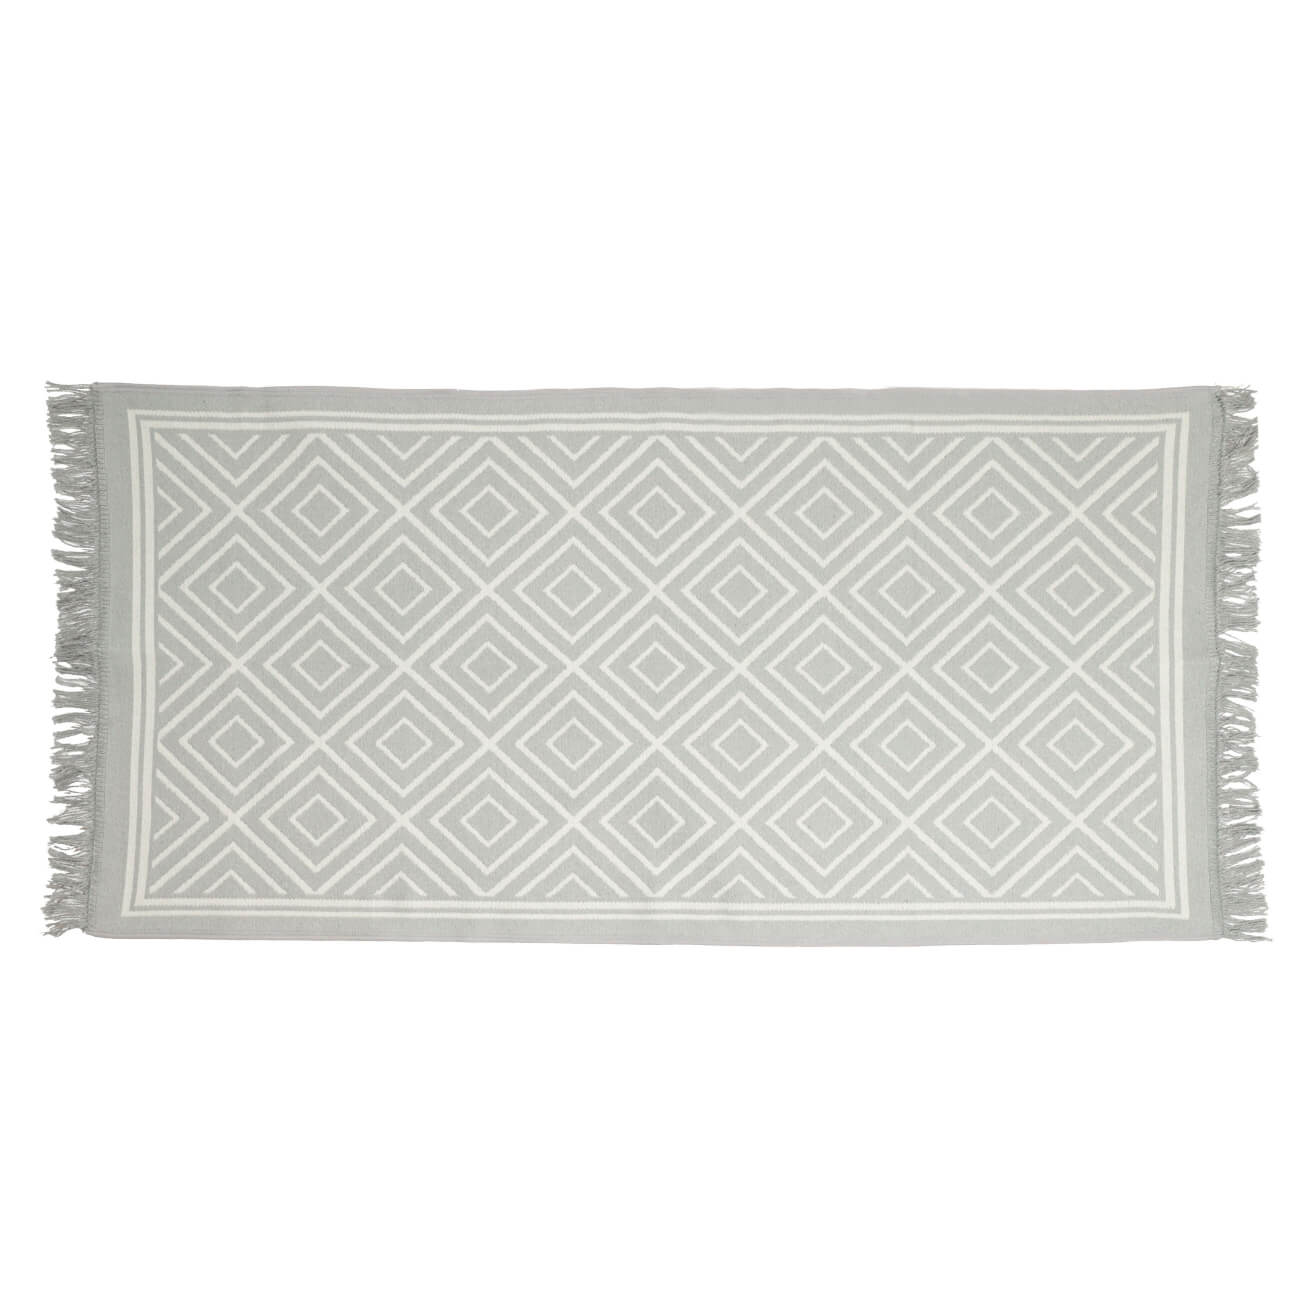 коврик придверный x y carpet оранжевый 50х80 см Коврик, 80х150 см, двусторонний, с бахромой, акрил, бело-серый, Узор, Carpet